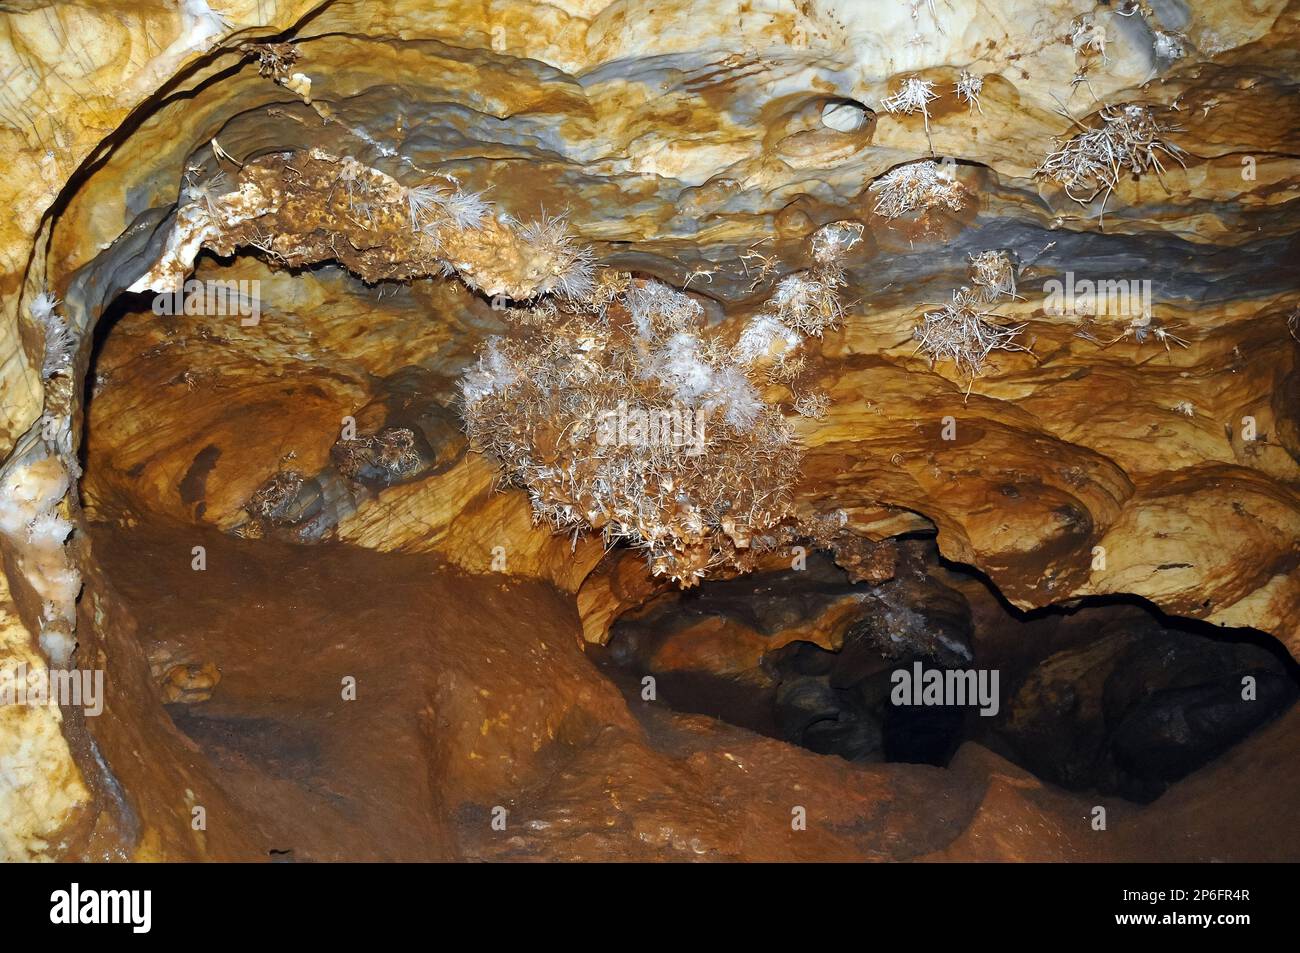 Ochtinská Aragonite Cave, Ochtinská aragonitová jaskyňa, Martonházi-aragonitbarlang, Slovak Karst, Slovak Republic, Europe, UNESCO World Heritage Site Stock Photo